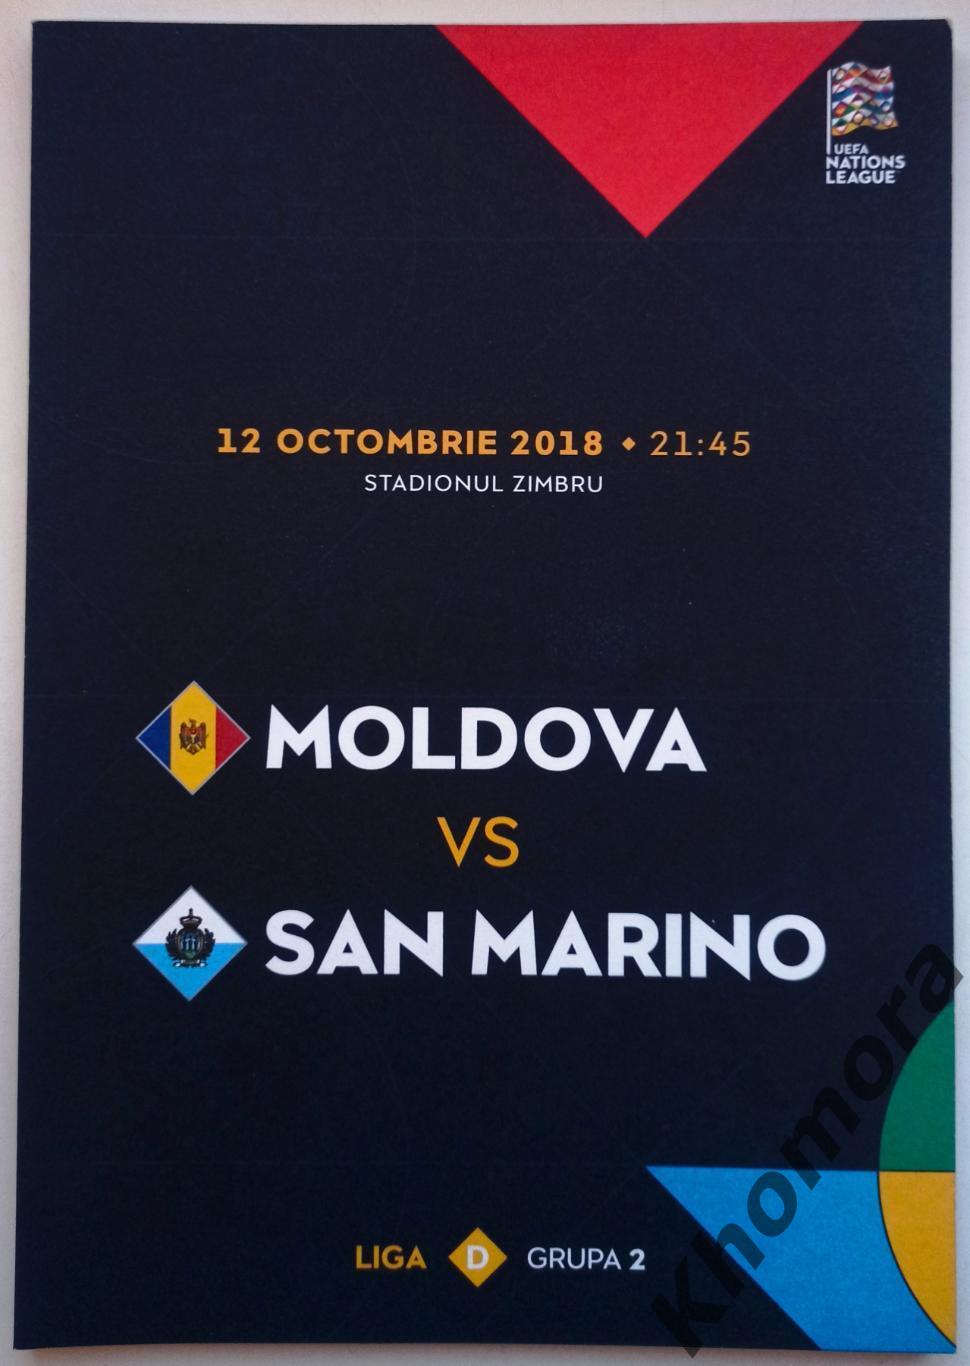 Молдова - Сан-Марино 12.10.2018 - официальная программа